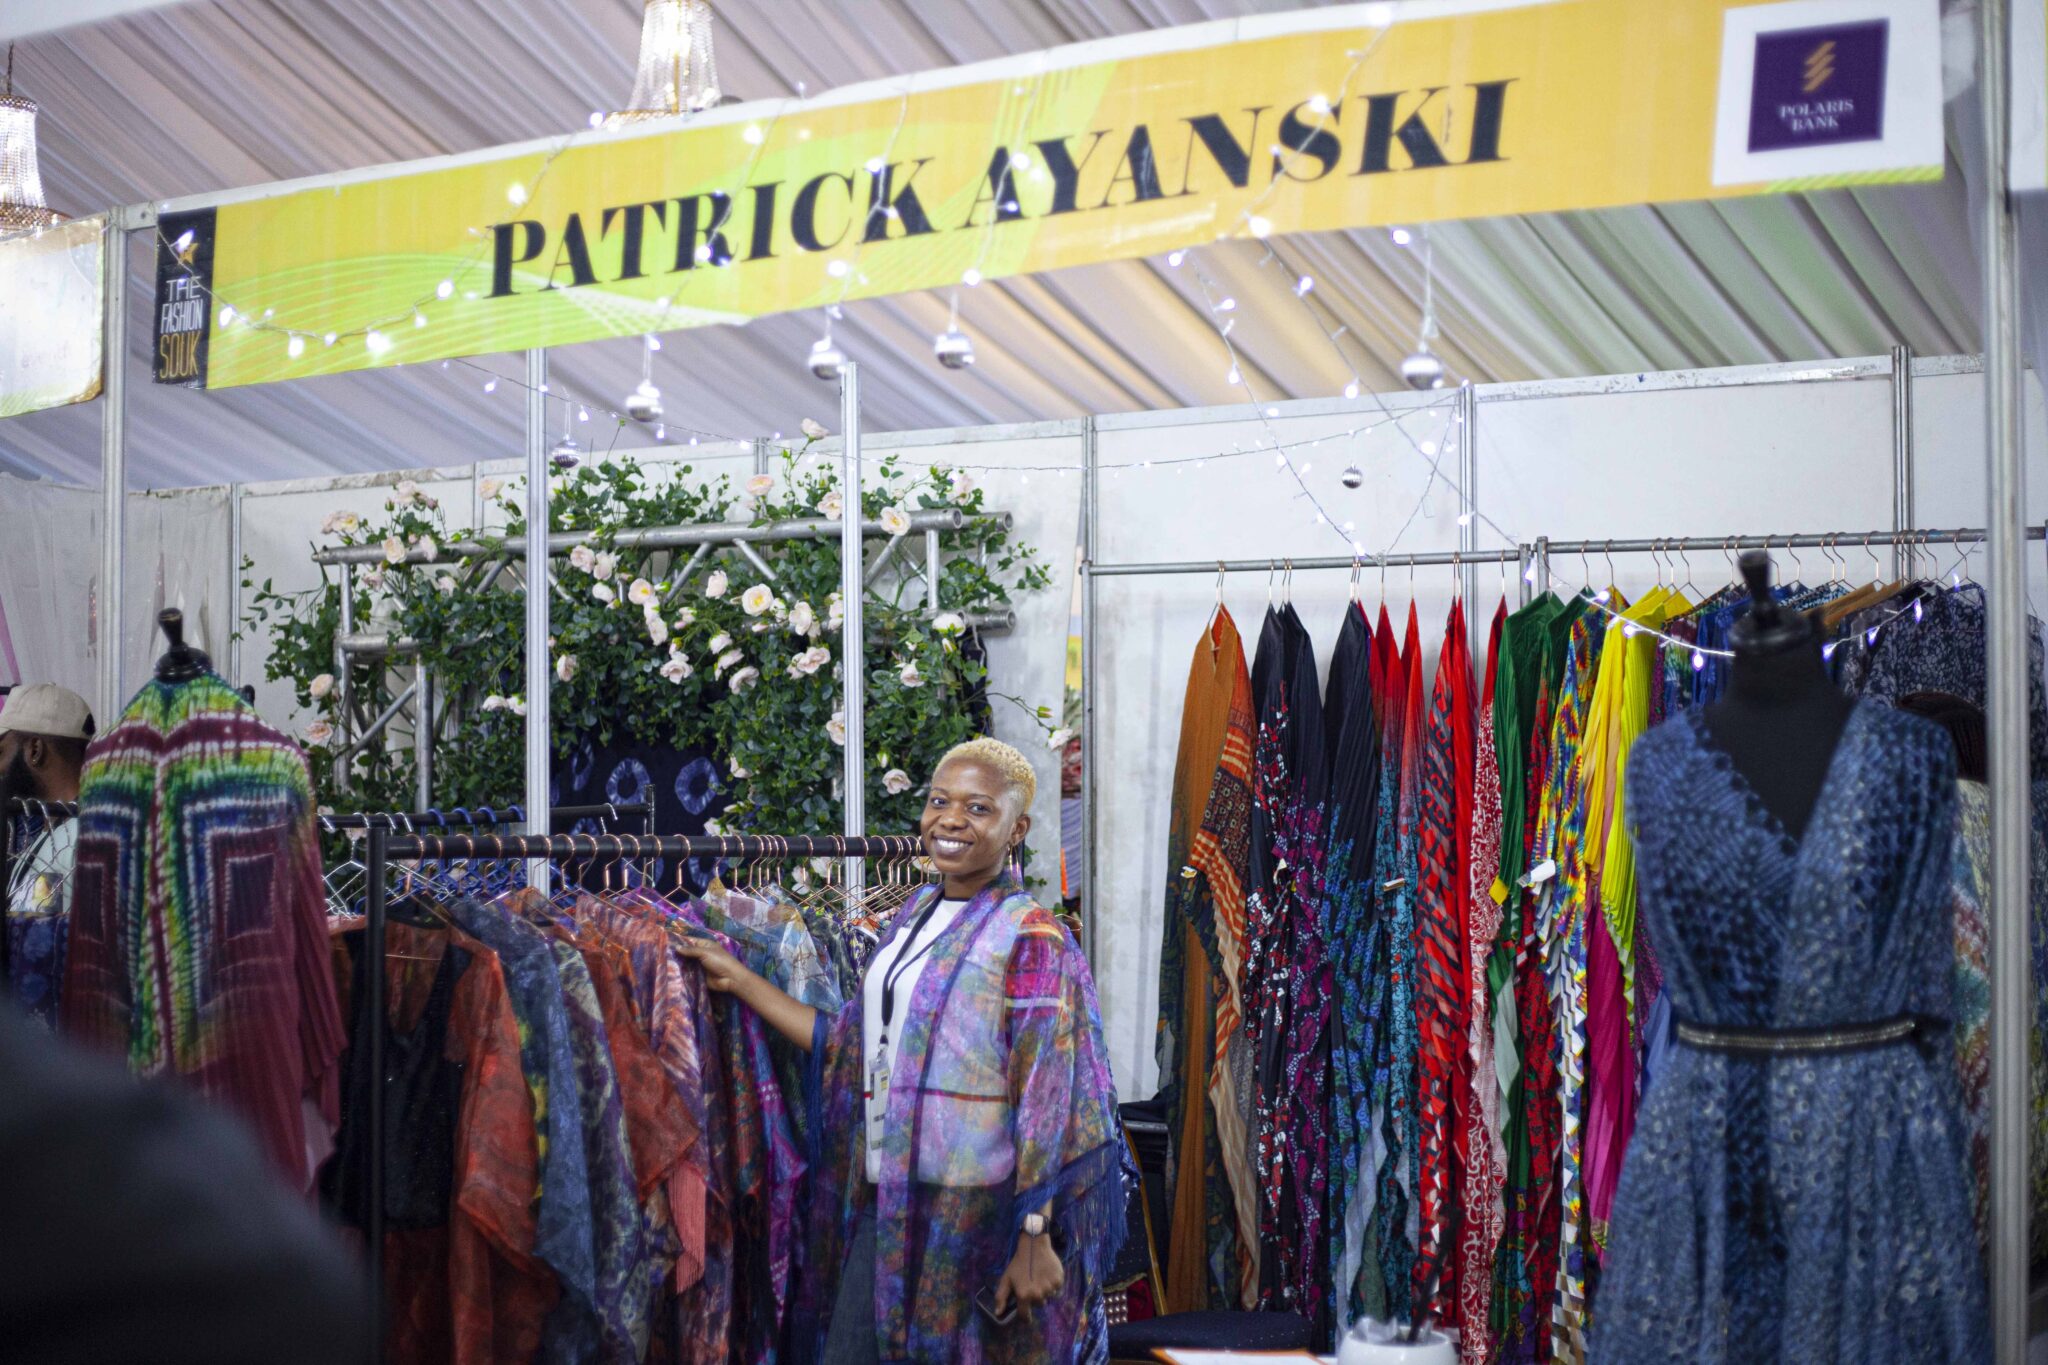 Ayanski Fabrics